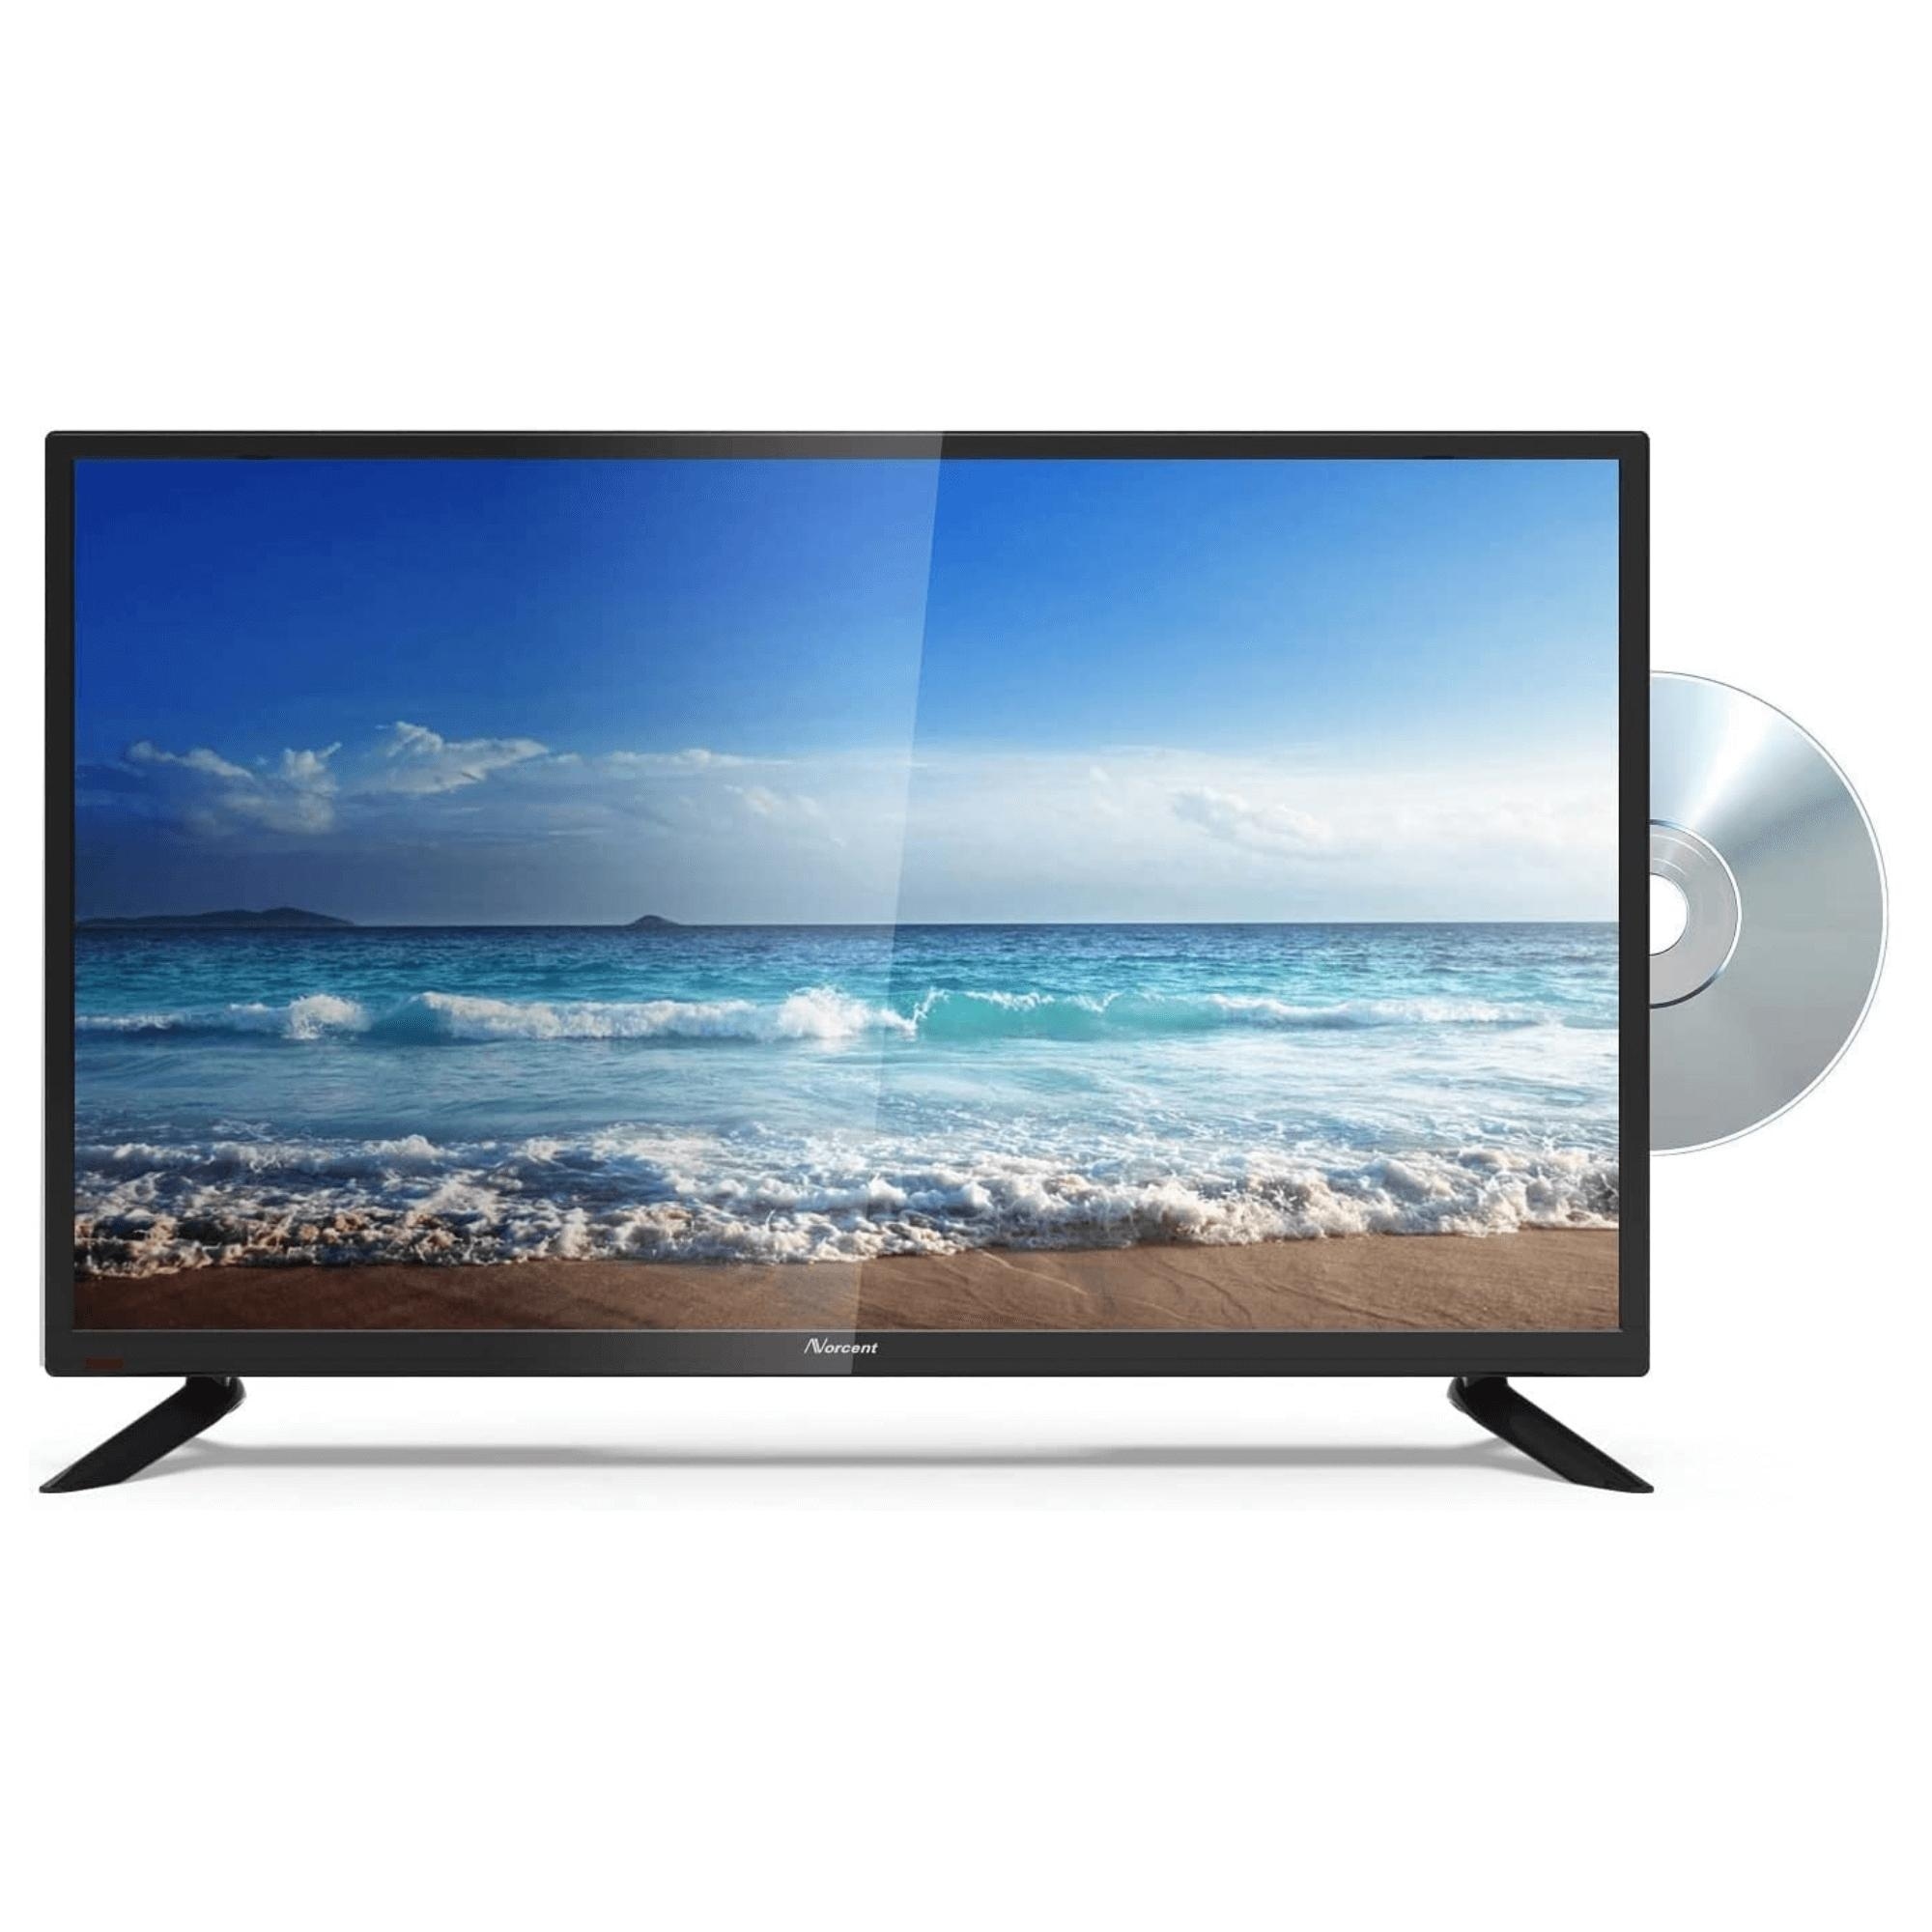 Norcent 32 Inch 720P LED HD Backlight Flat TV DVD ...